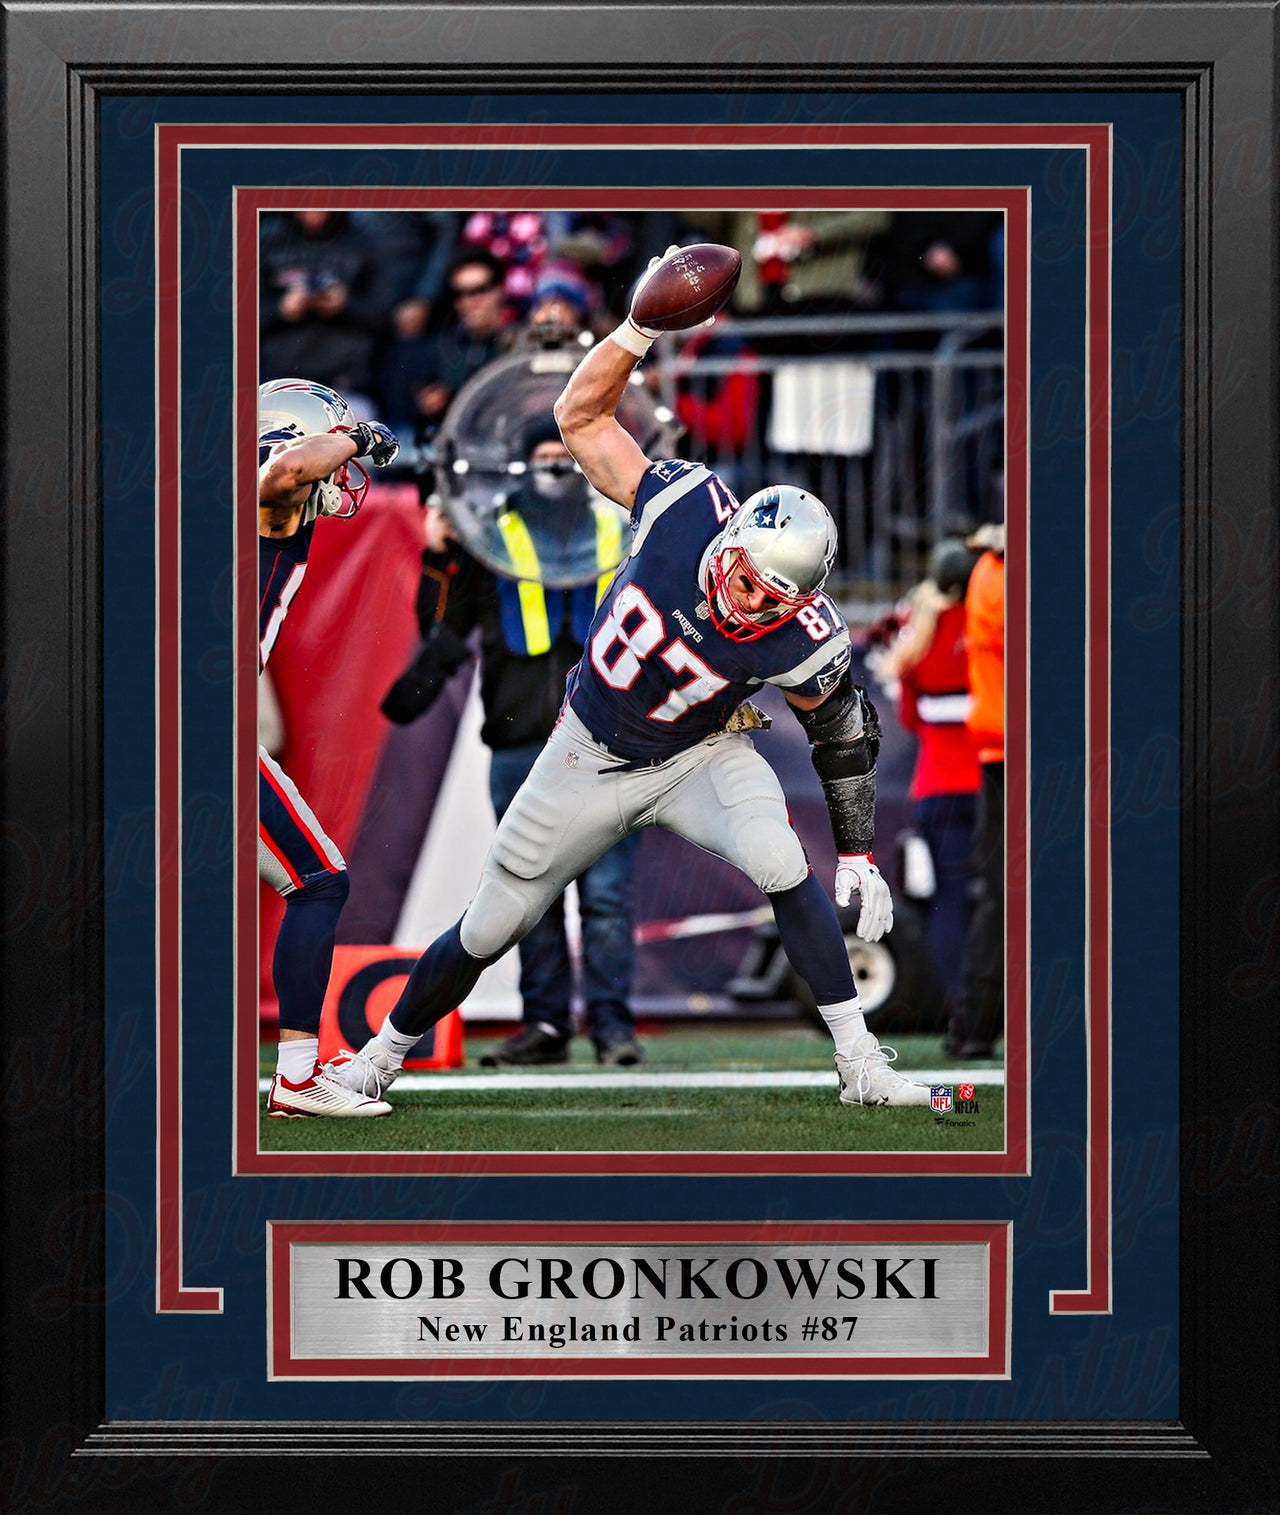 Rob Gronkowski Touchdown Spike New England Patriots 8" x 10" Framed Football Photo - Dynasty Sports & Framing 